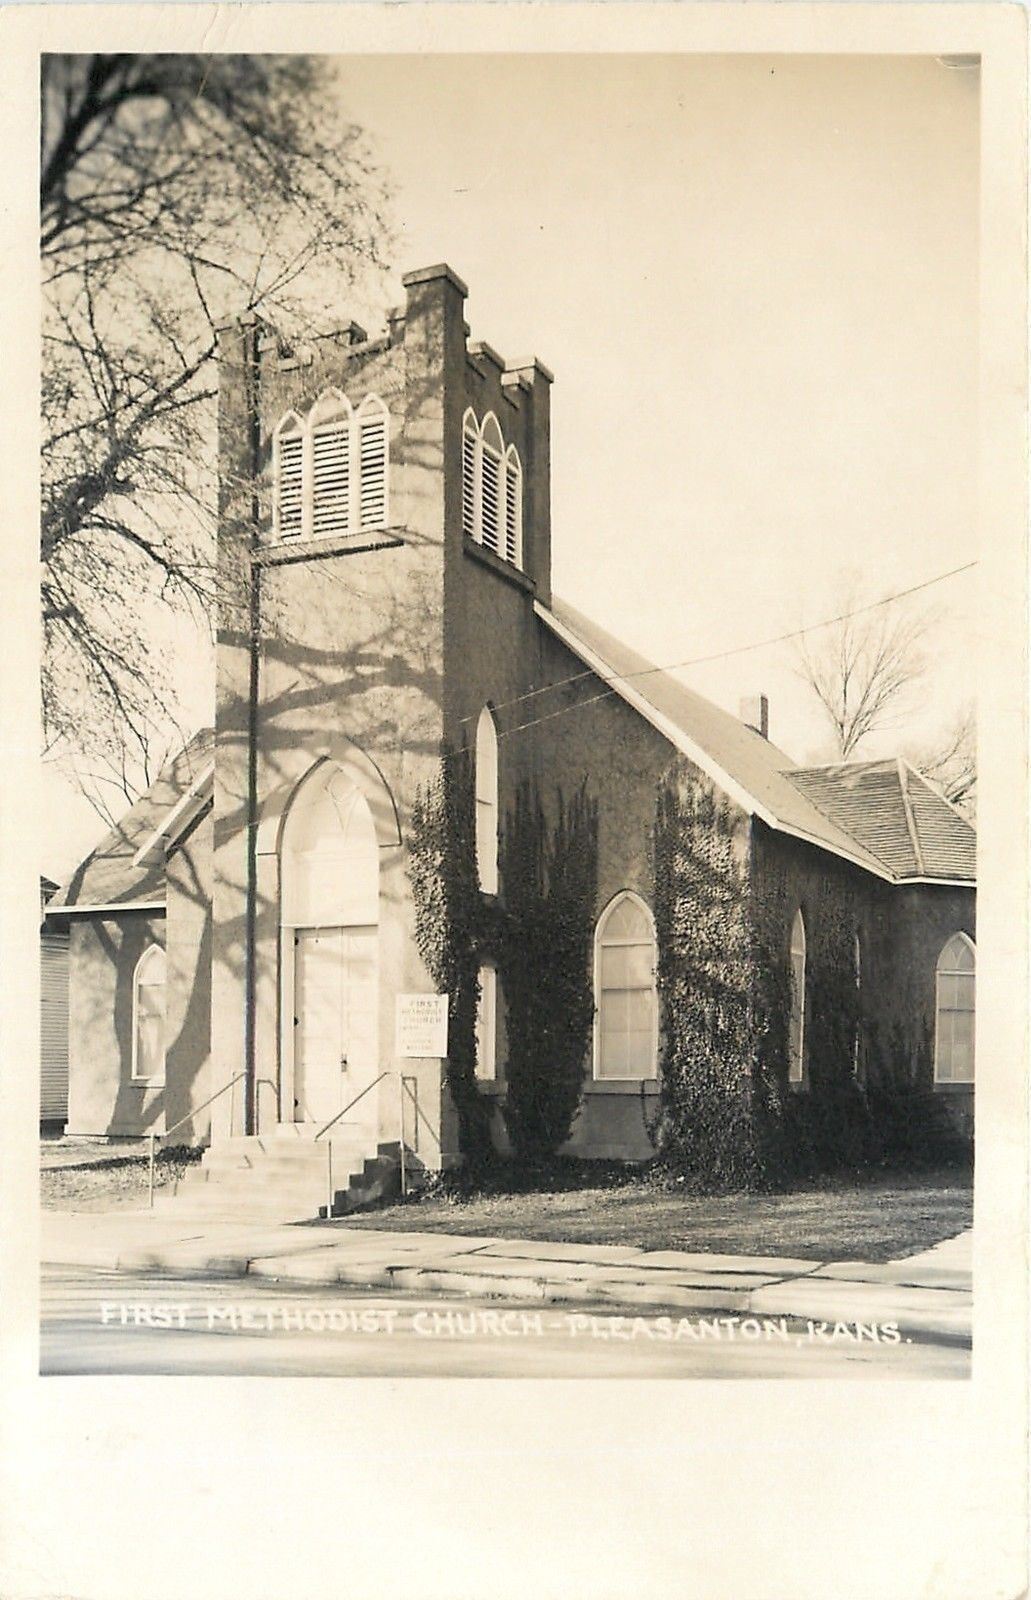 Pleasanton Kansas~Some Ivy on Corners of 1st Methodist~Real Photo Postcard c1950